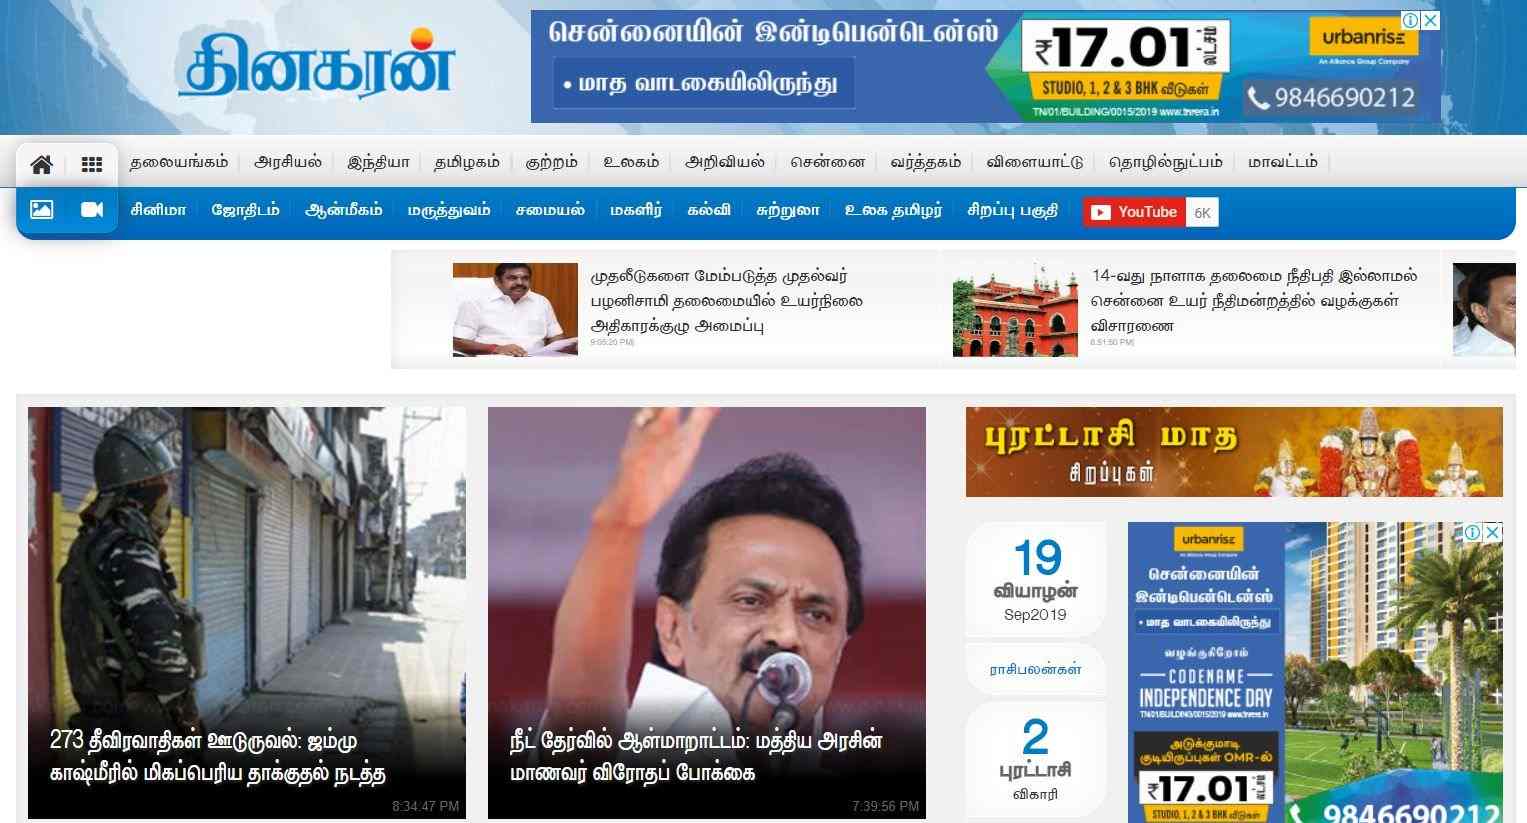 Tamil-language-website